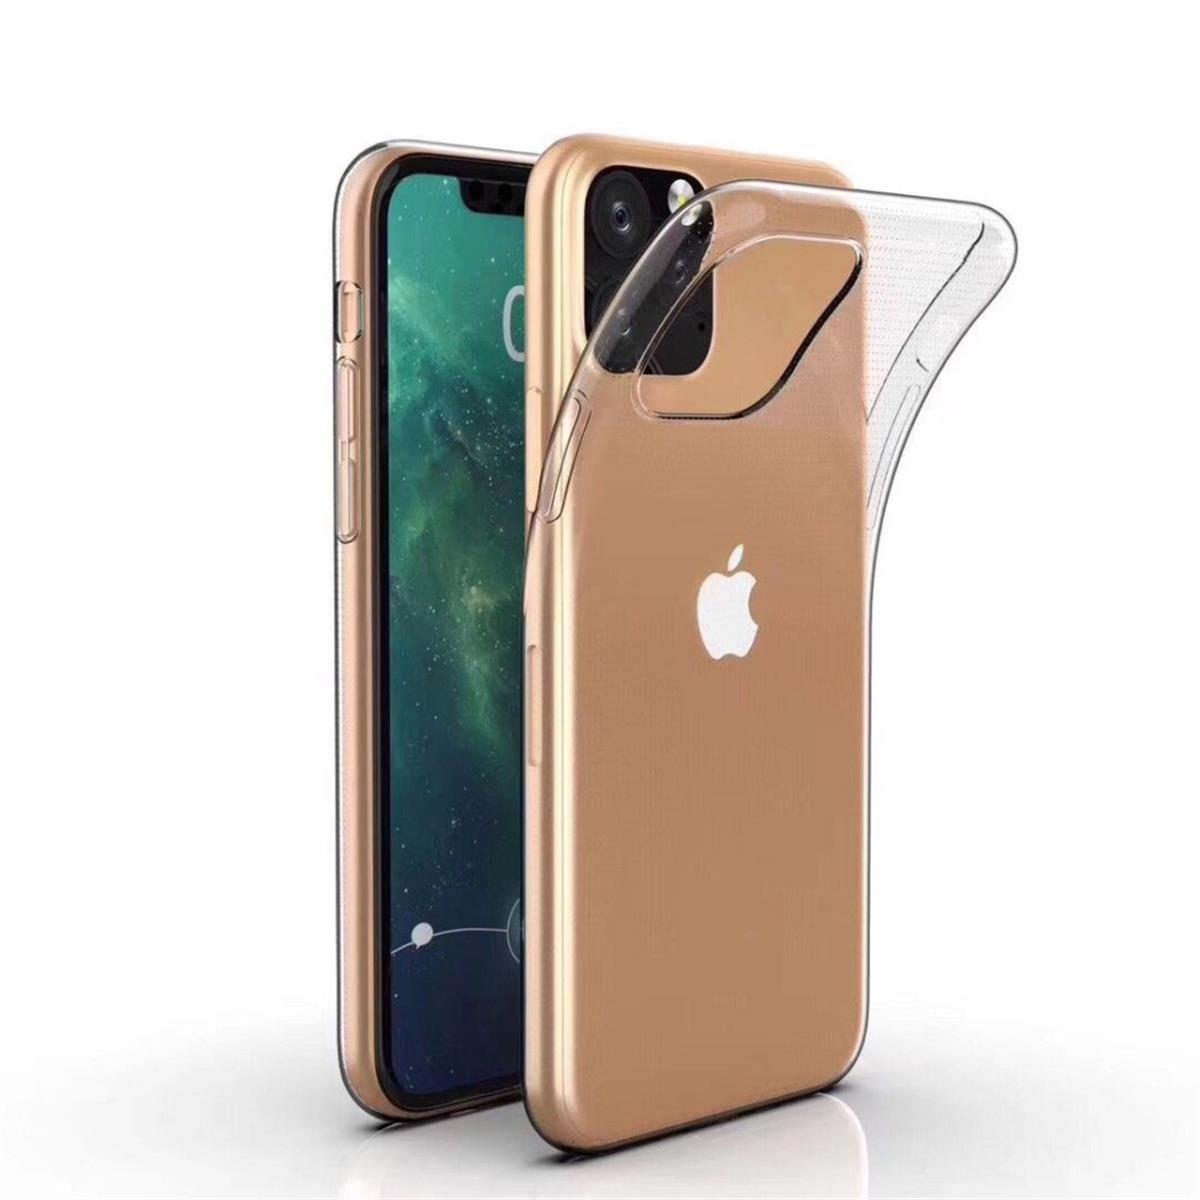 Hülle für Apple iPhone 11 Pro Max [6,5 Zoll] Handyhülle Case Schutzhülle transparent